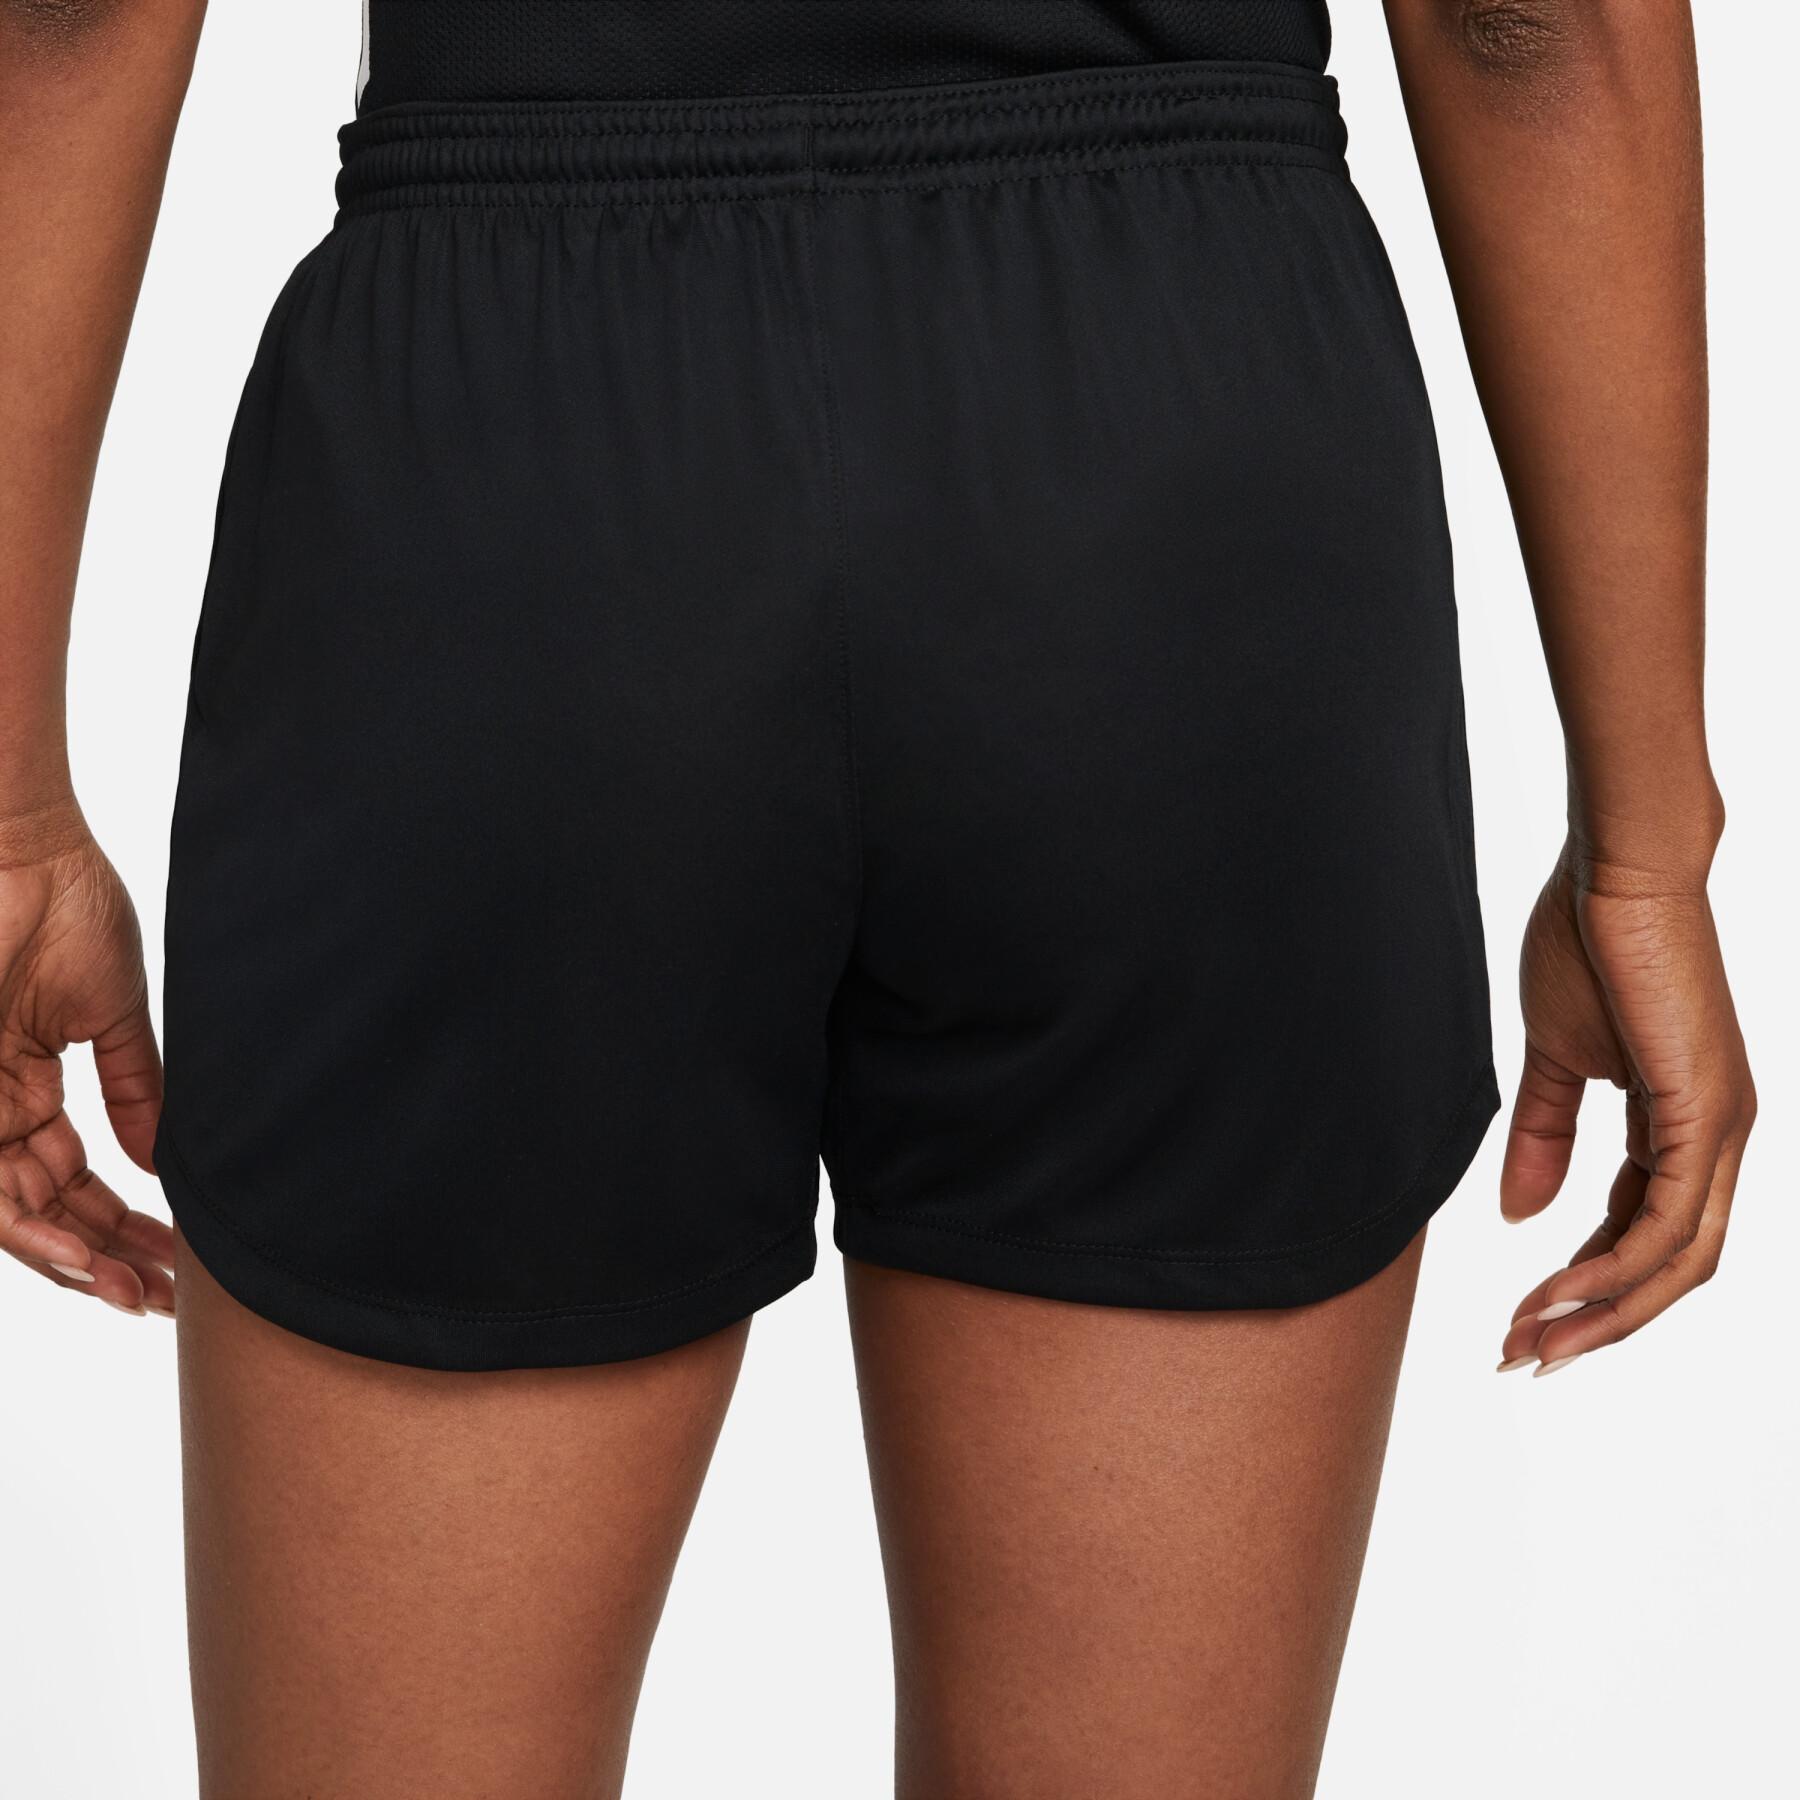 Pantalón corto de mujer Nike Dynamic Fit Park20